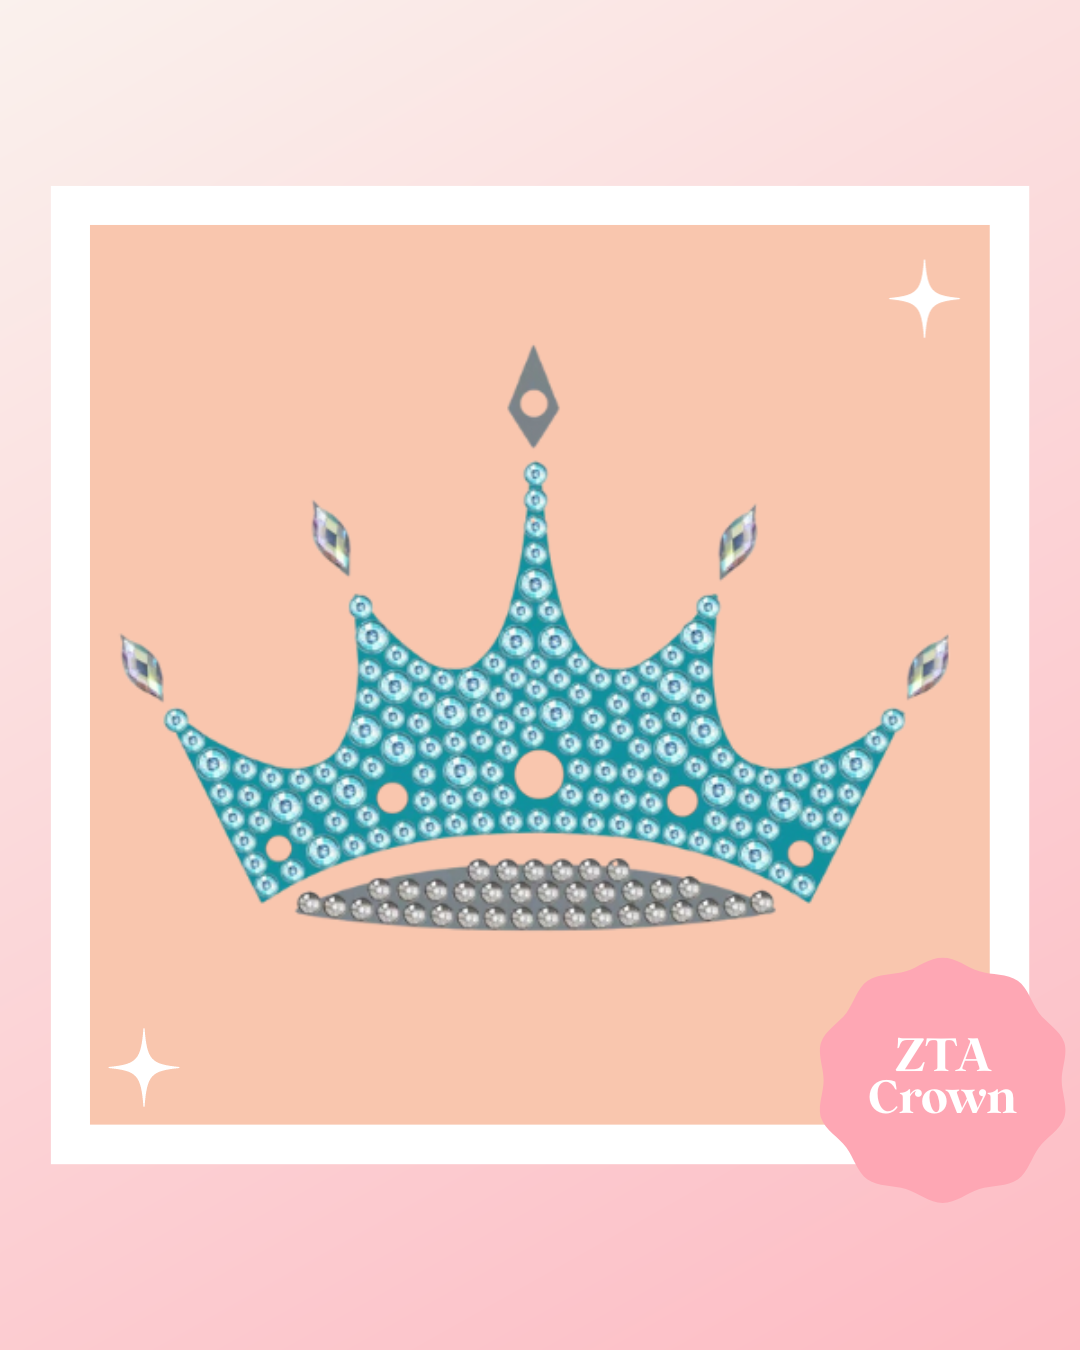 Zeta Tau Alpha Crown Keepsake Ornament